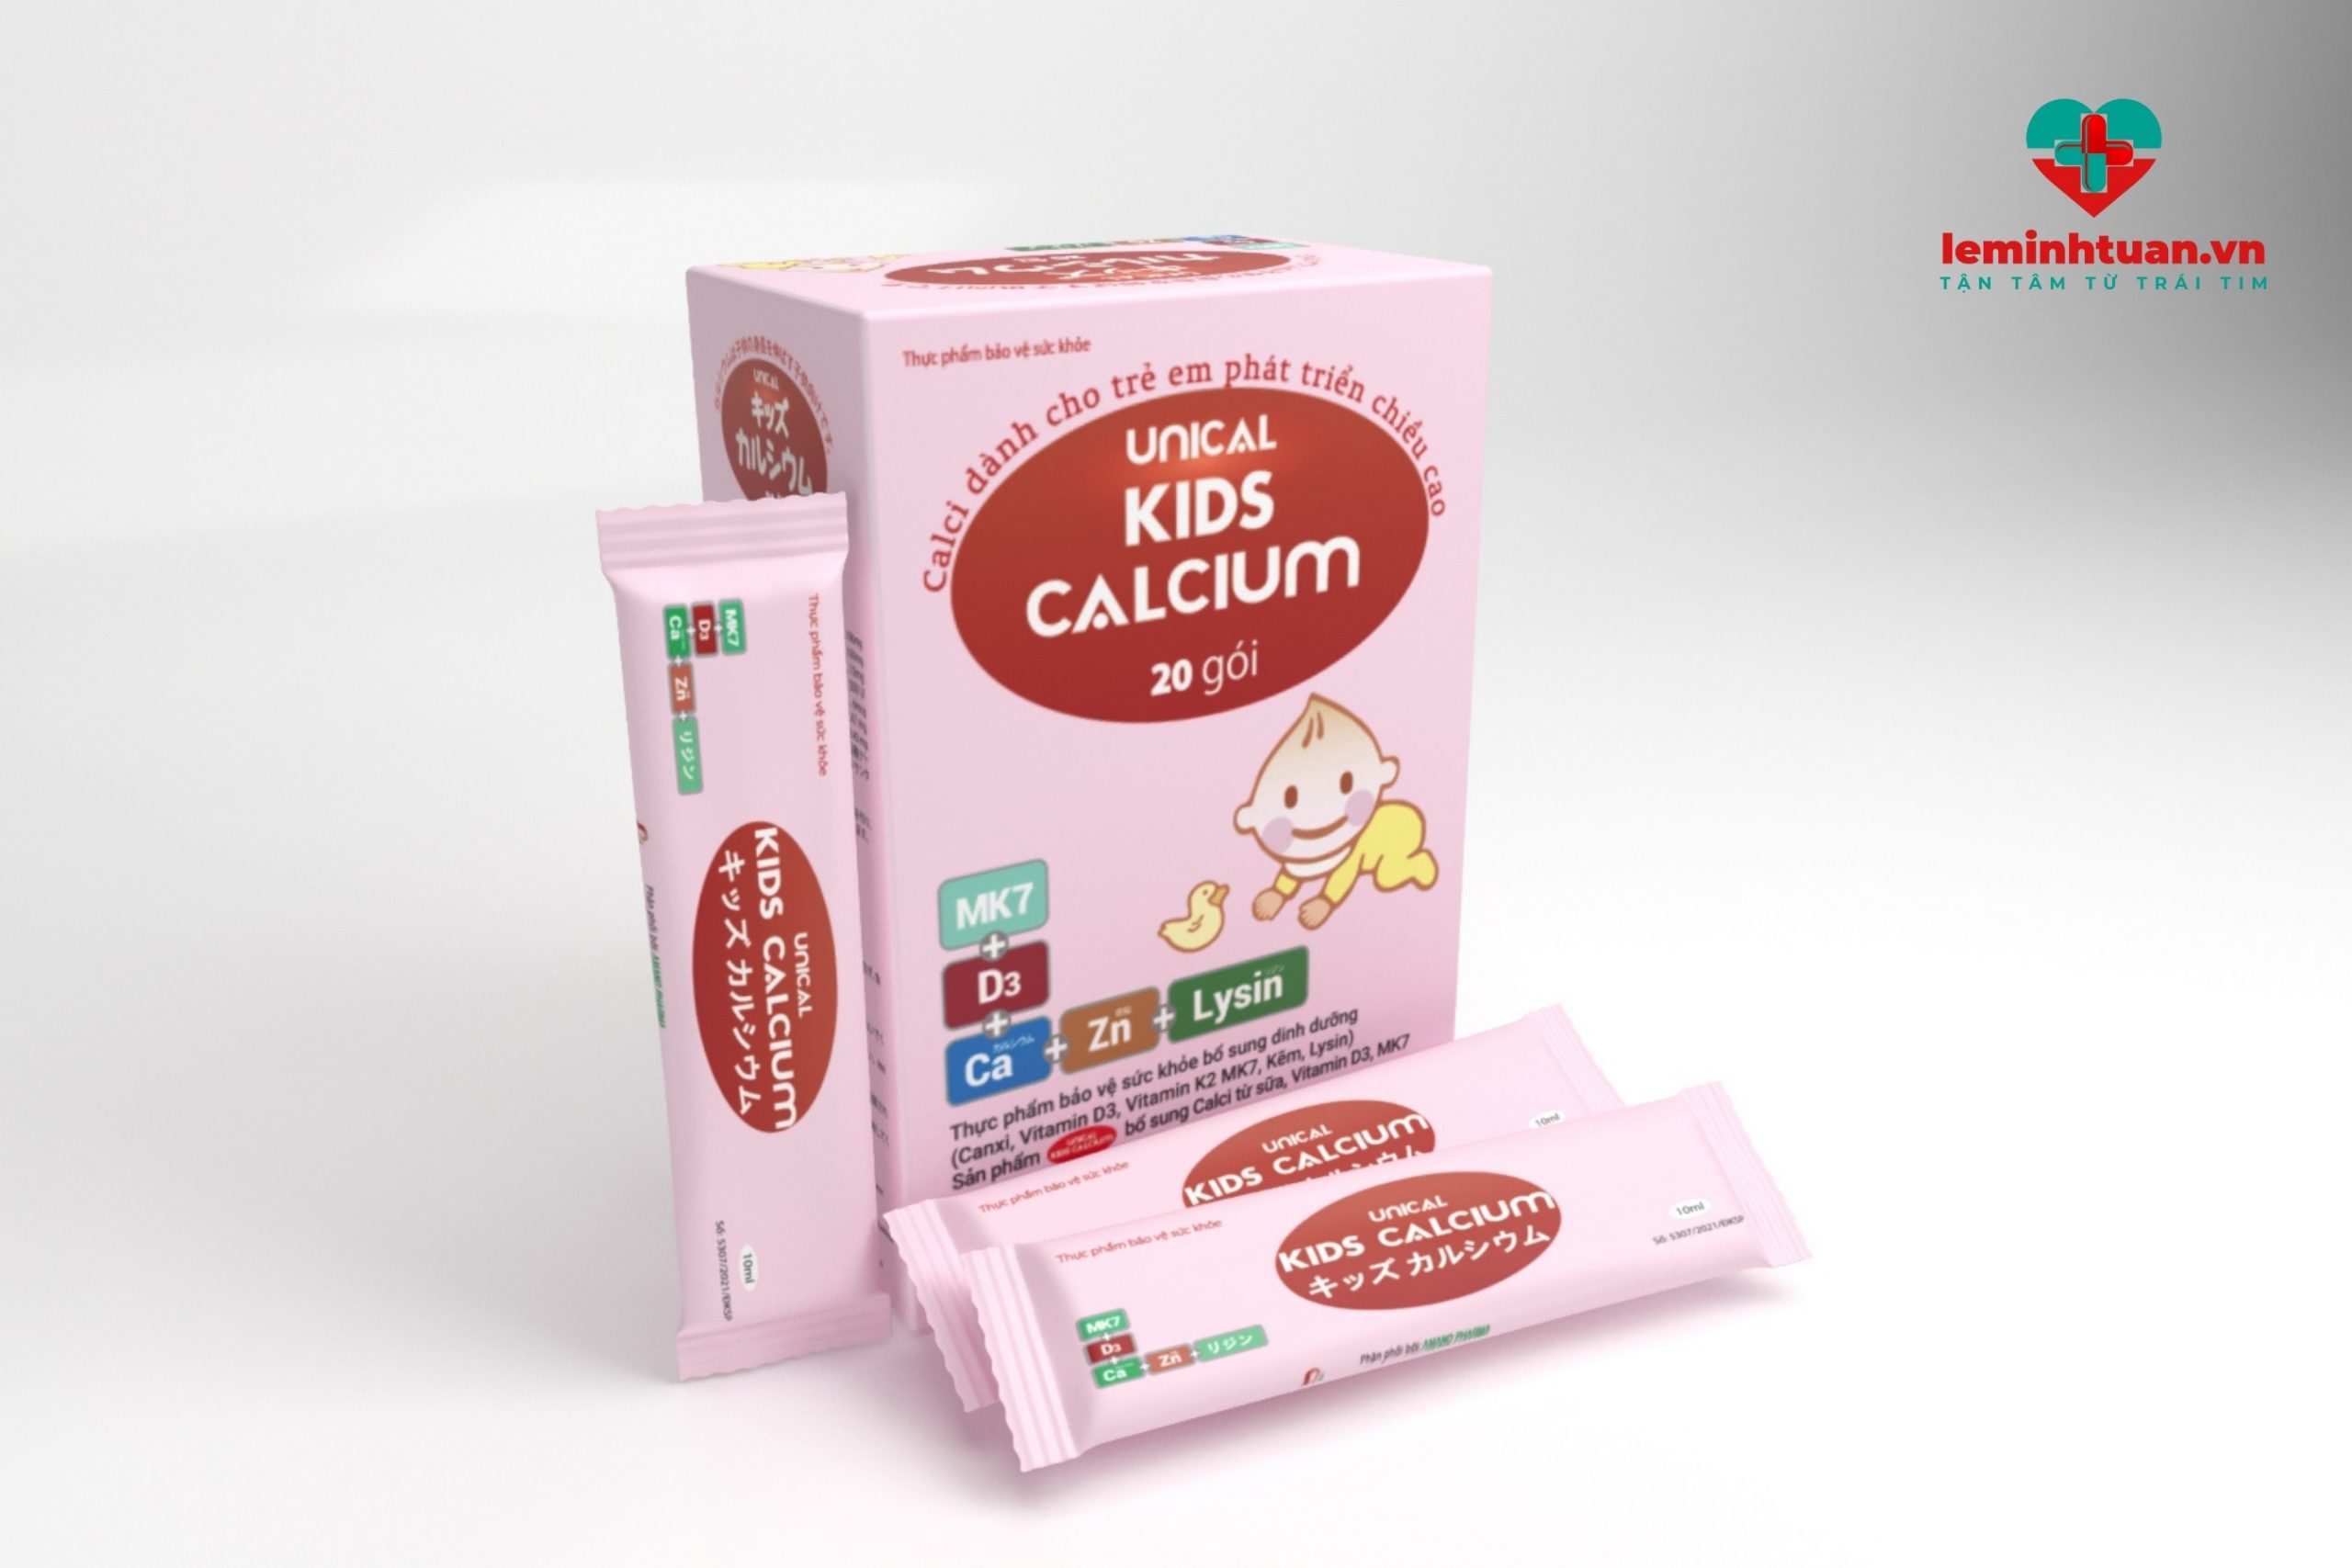 Unical Kids Calcium bổ sung vitamin D3 K2 cho trẻ sơ sinh